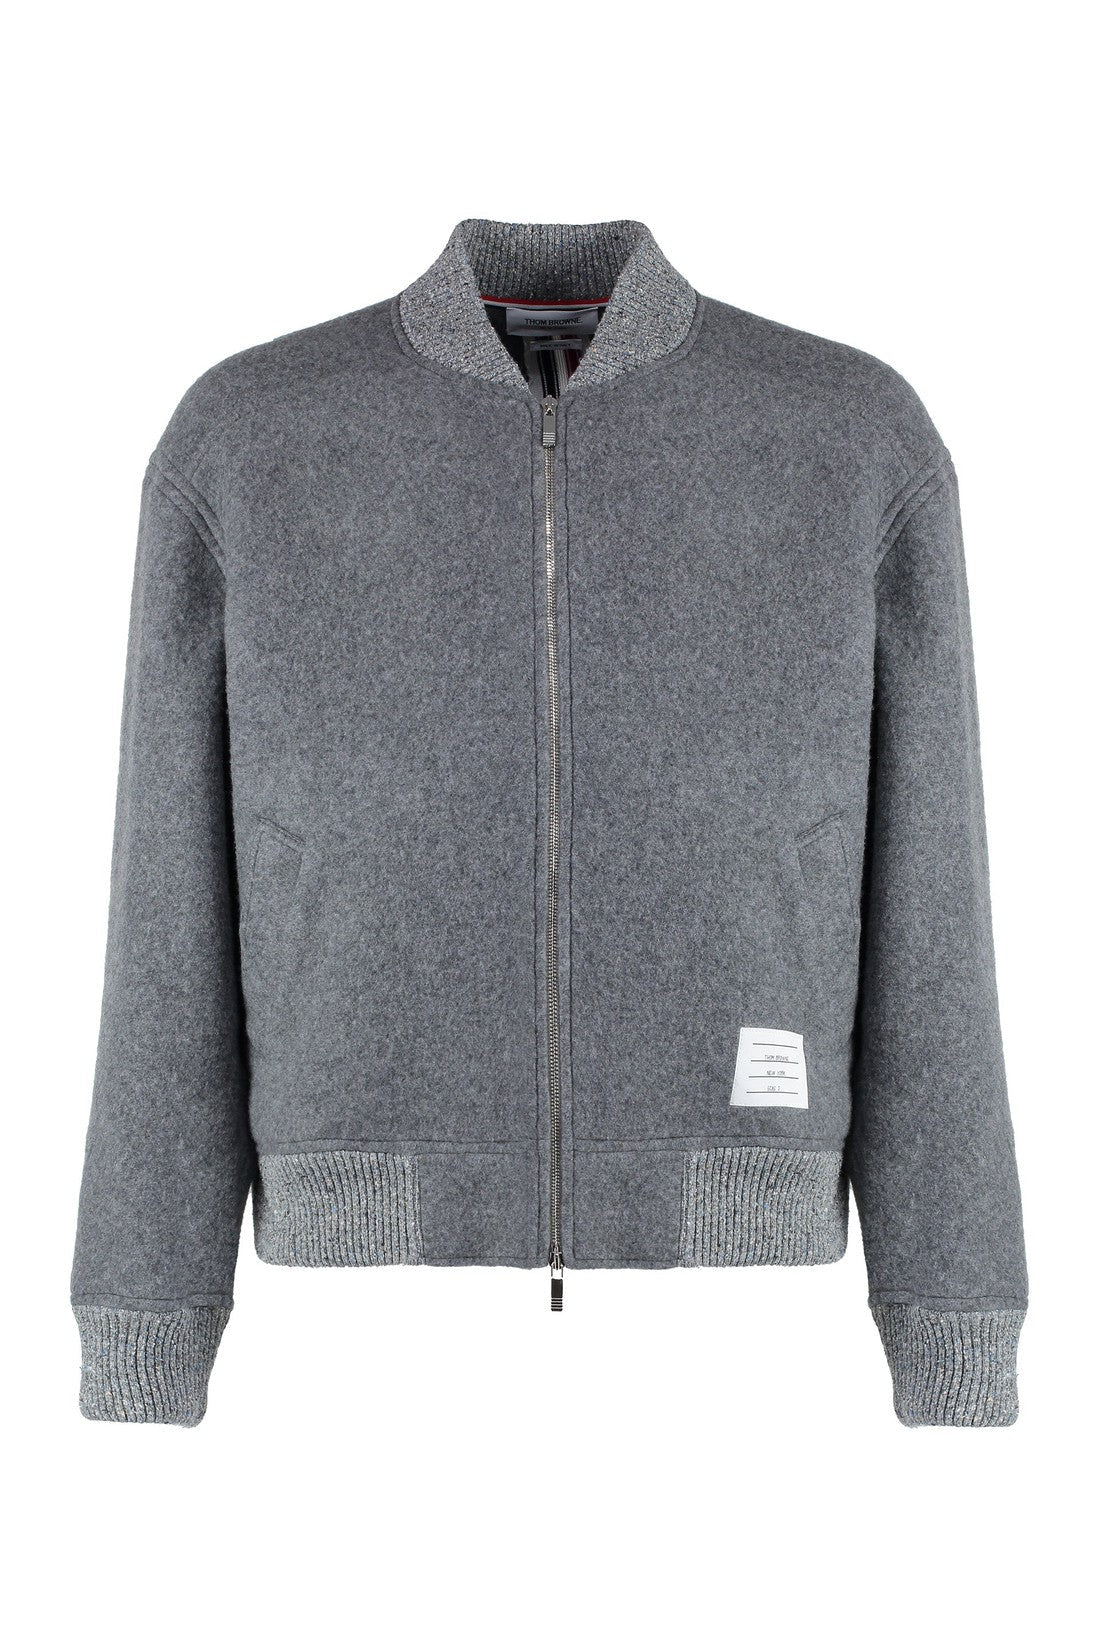 Thom Browne-OUTLET-SALE-Wool bomber jacket-ARCHIVIST